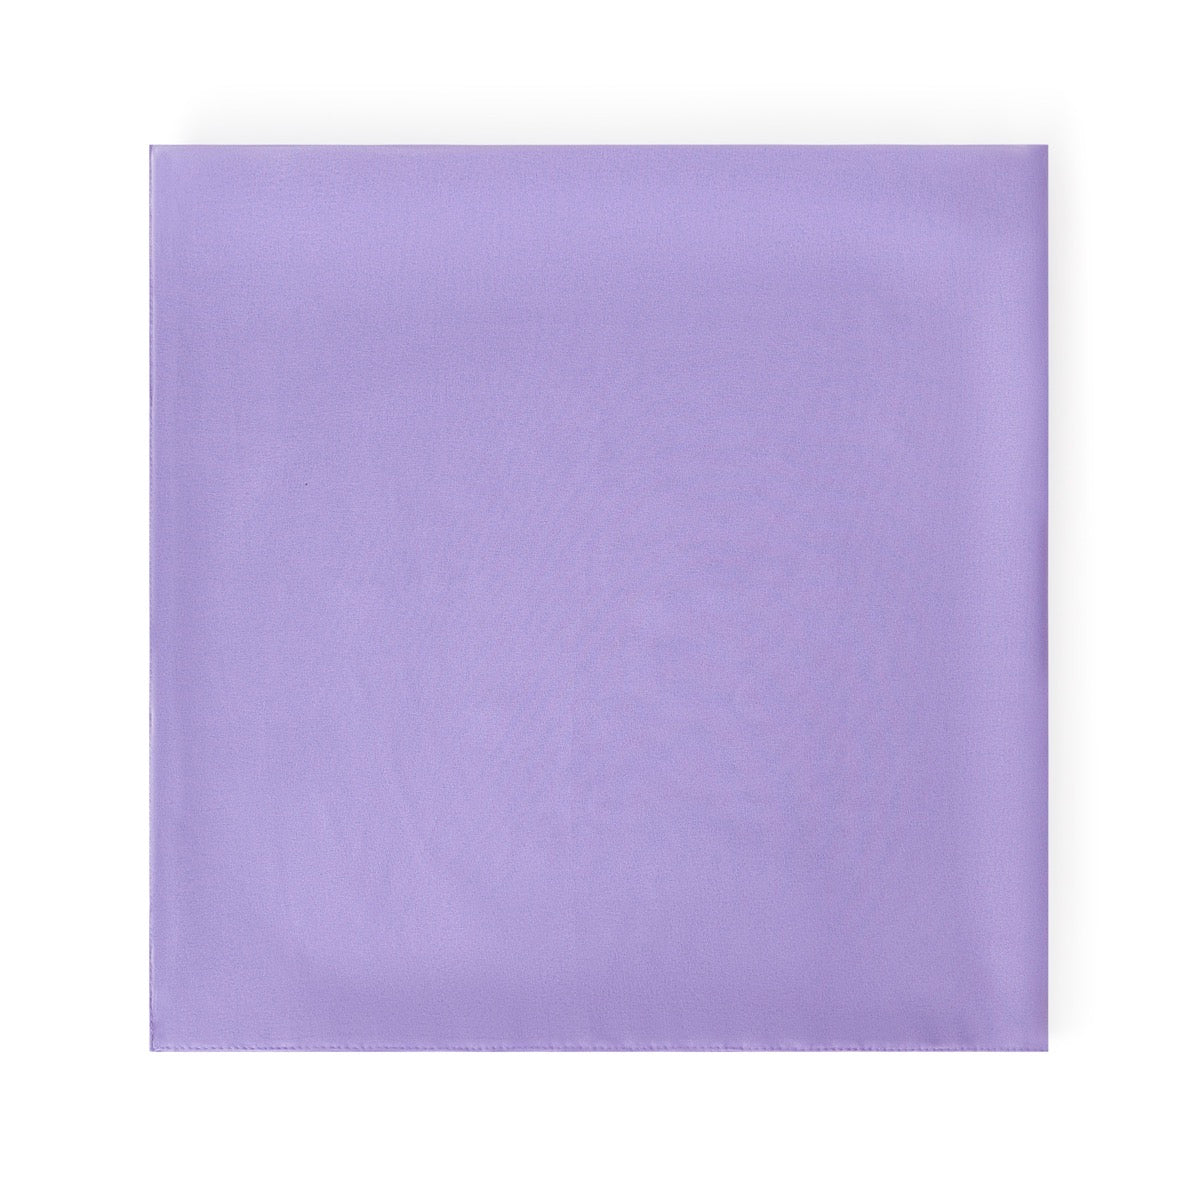 Plain purple square scarf